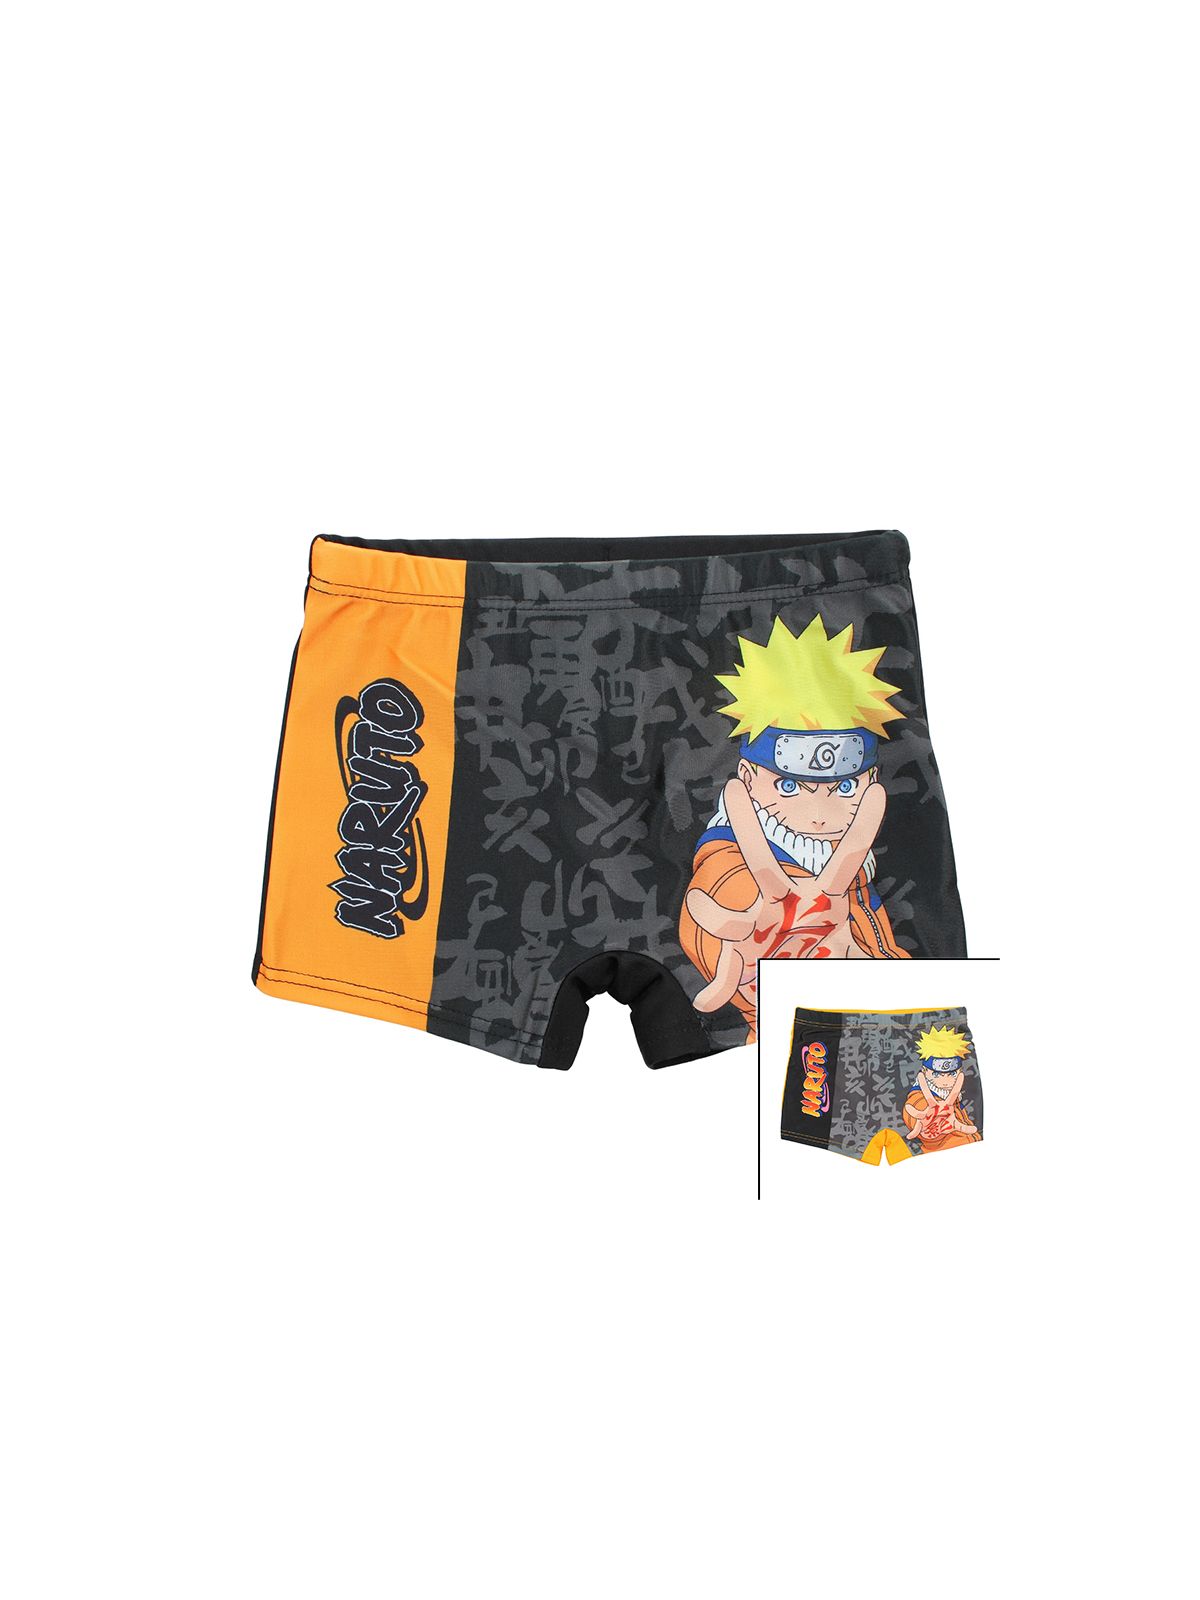 Naruto zwembroek.